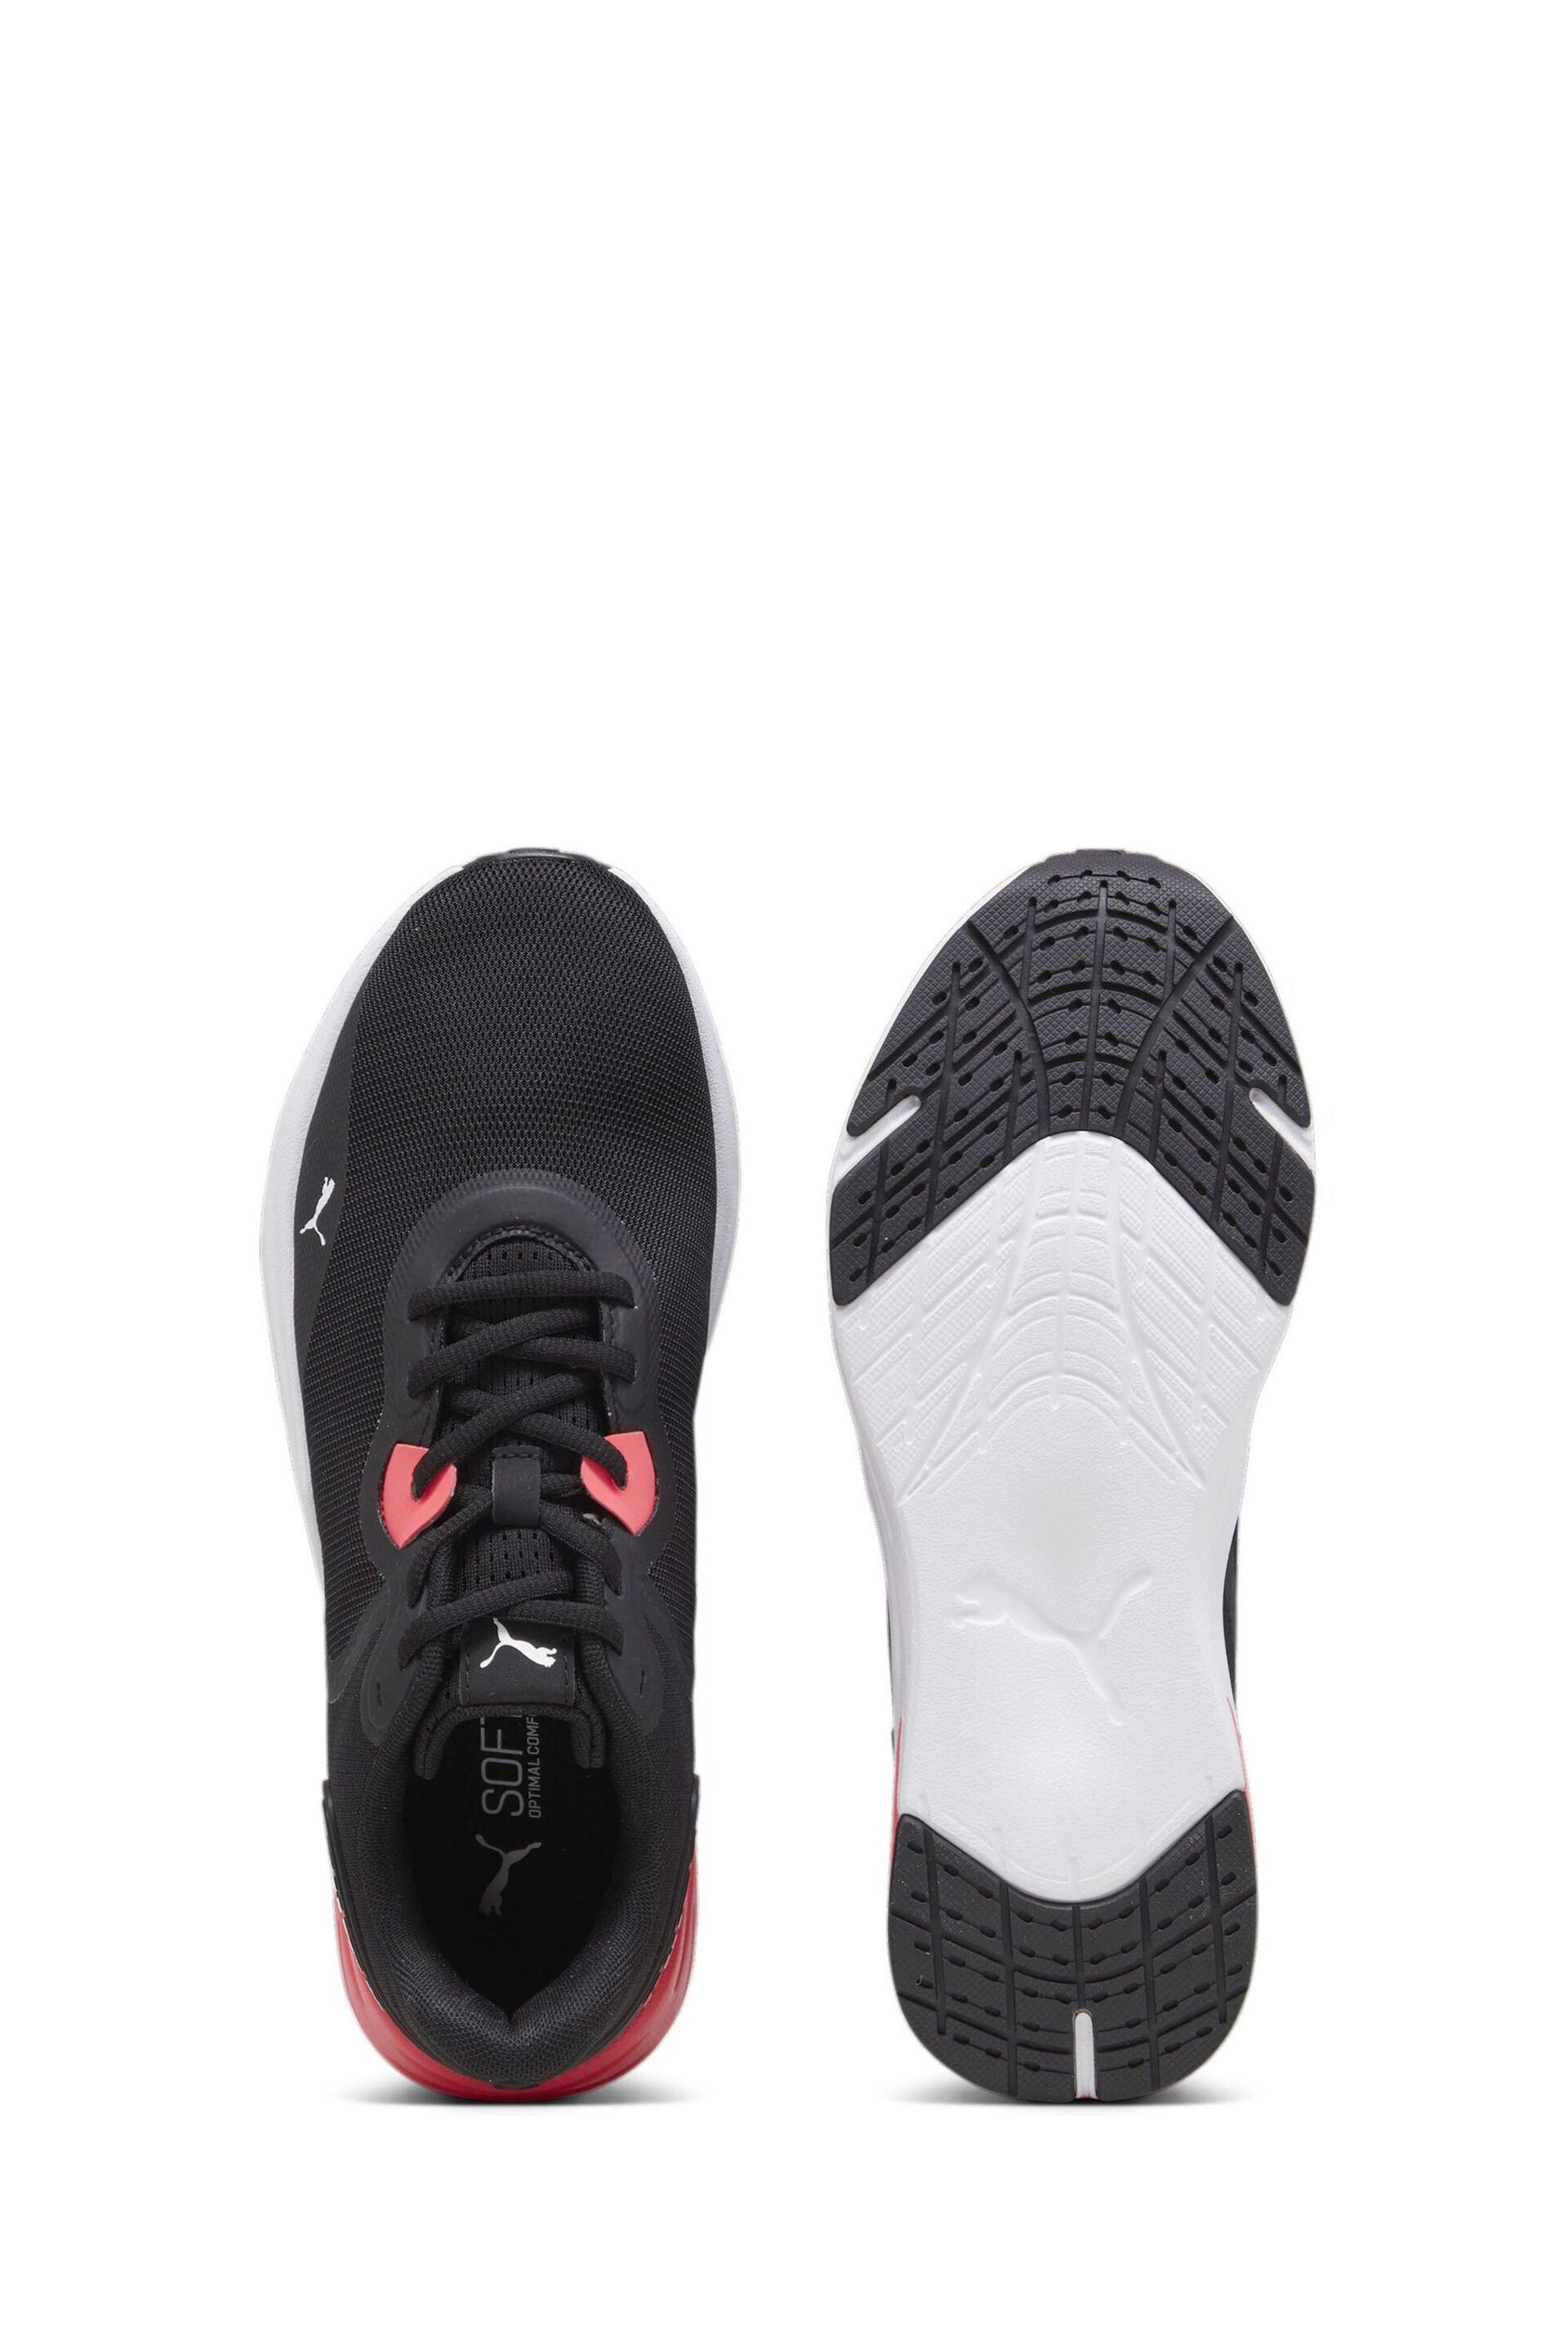 Puma Black Disperse XT 3 Training Shoes - Image 4 of 6